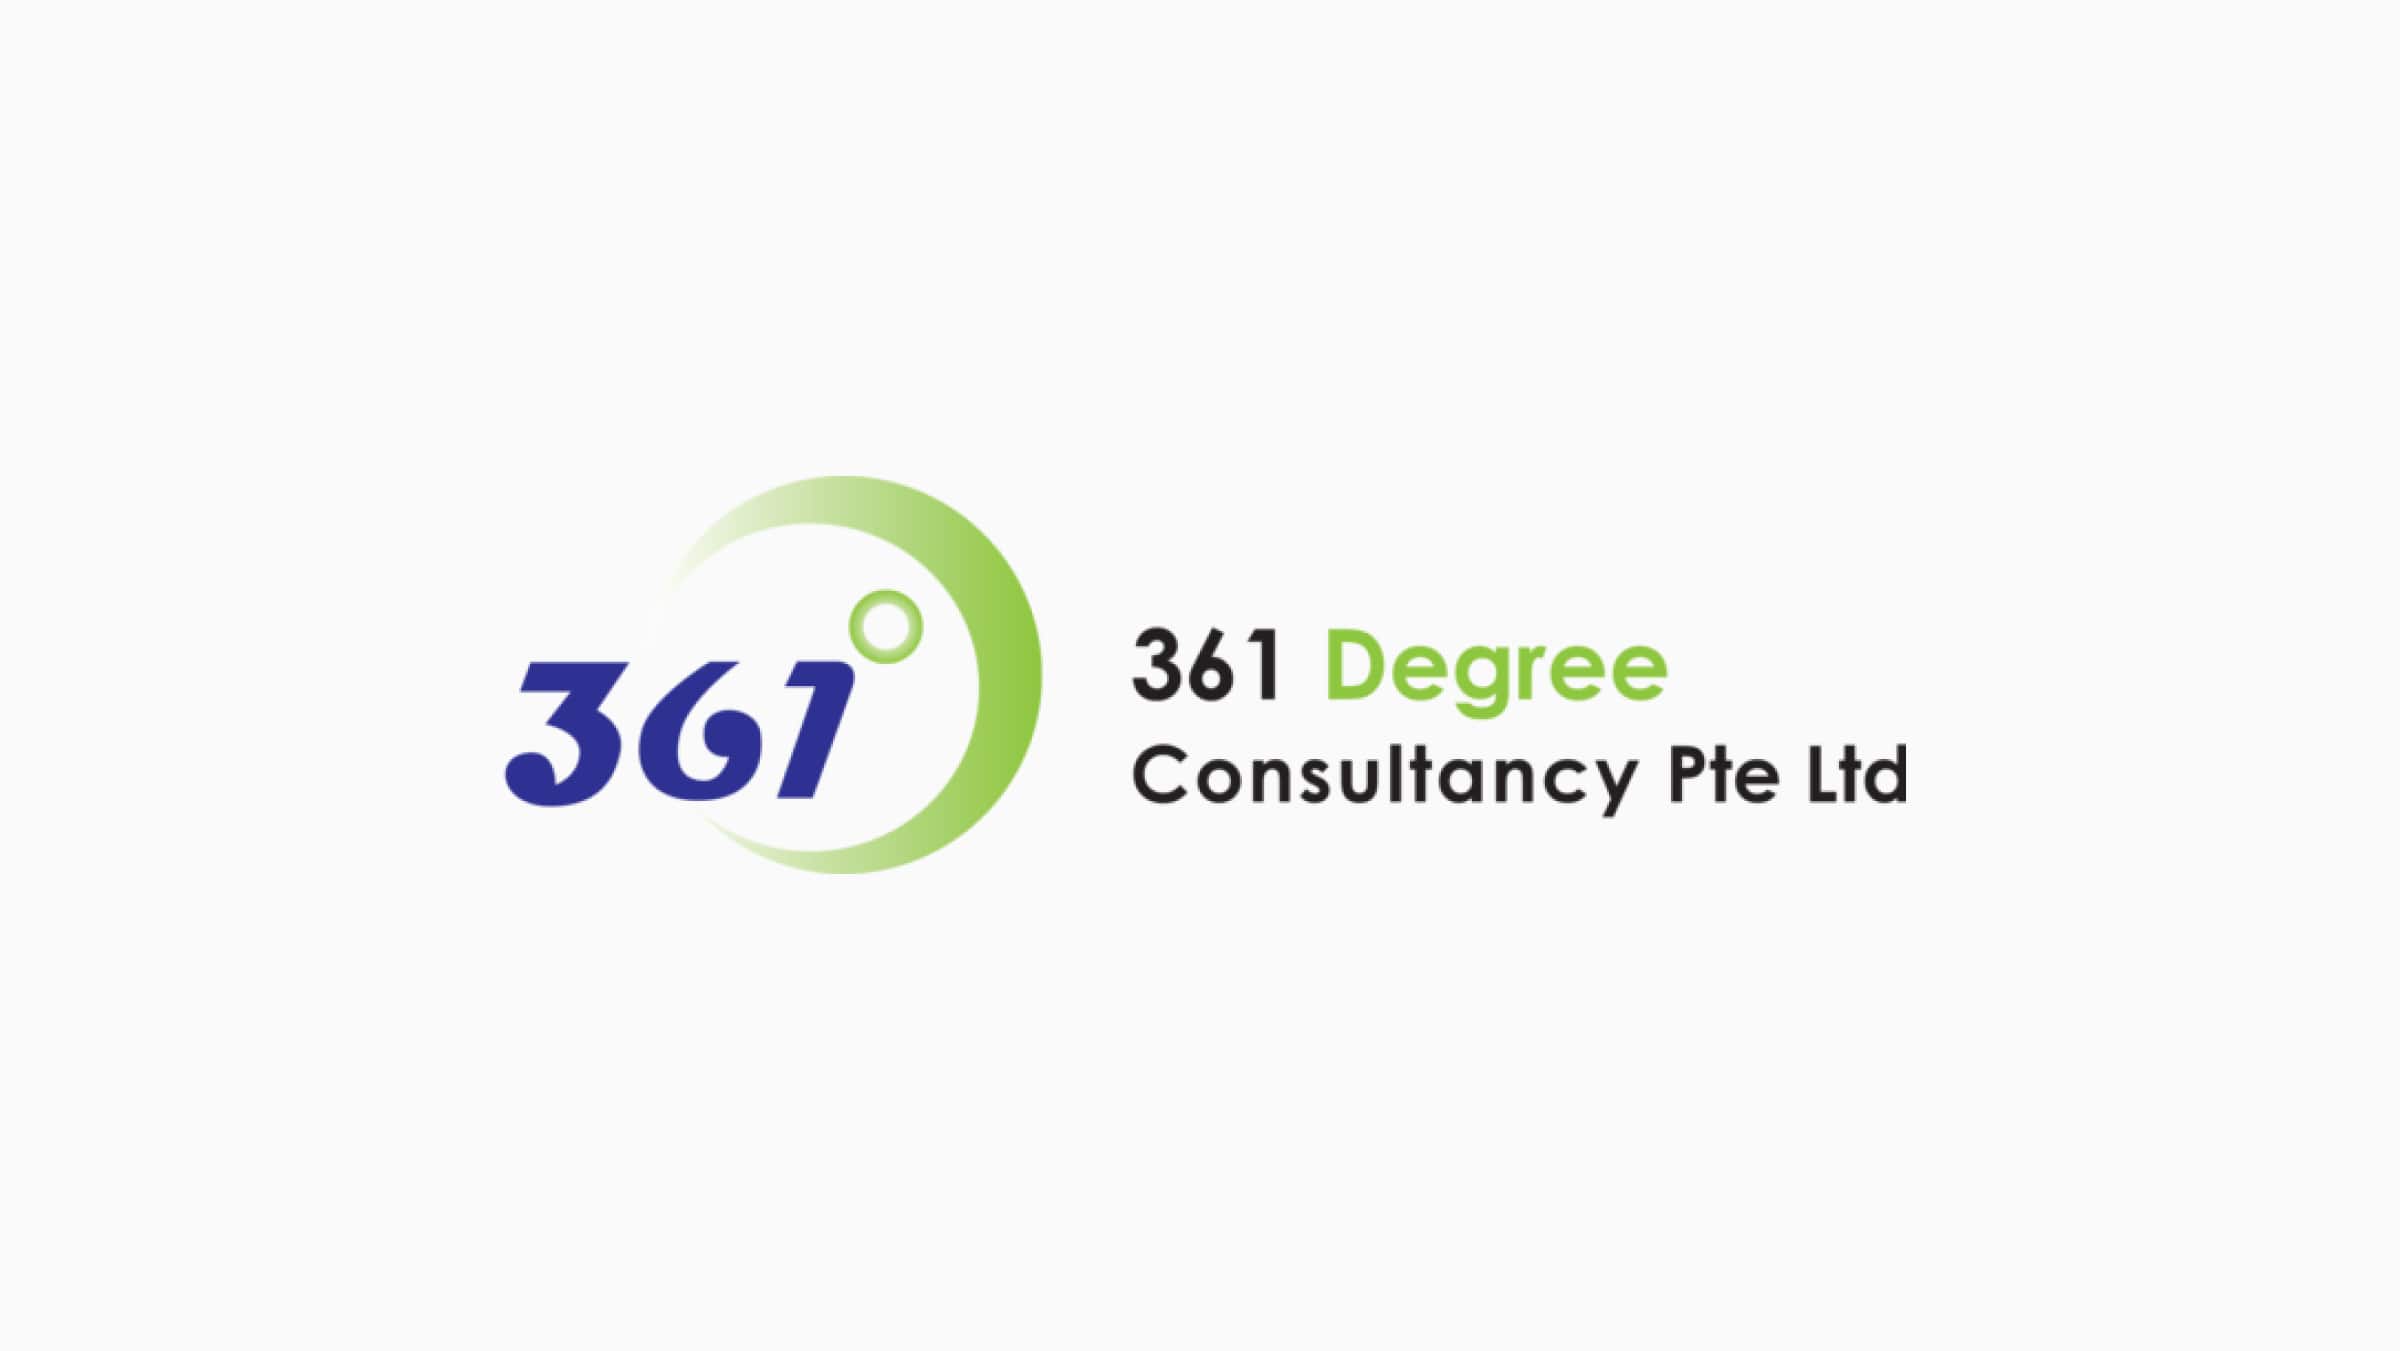 The 361 Degree Consultancy logo